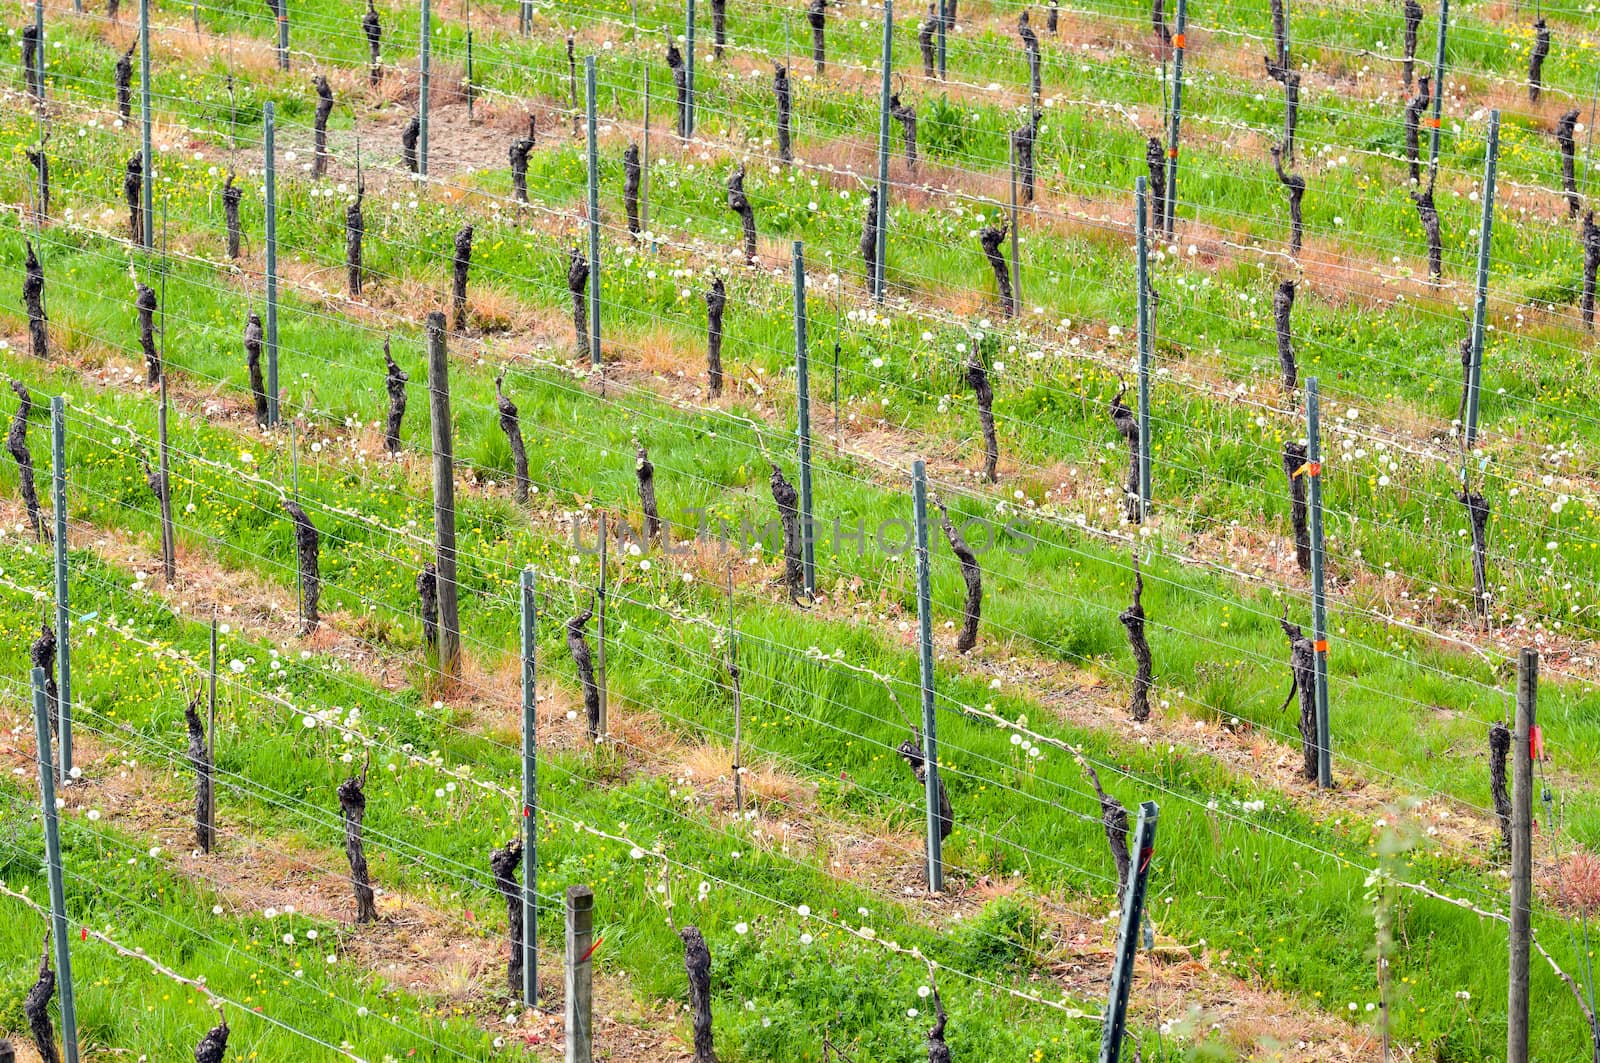 Vineyard Field by Rainman